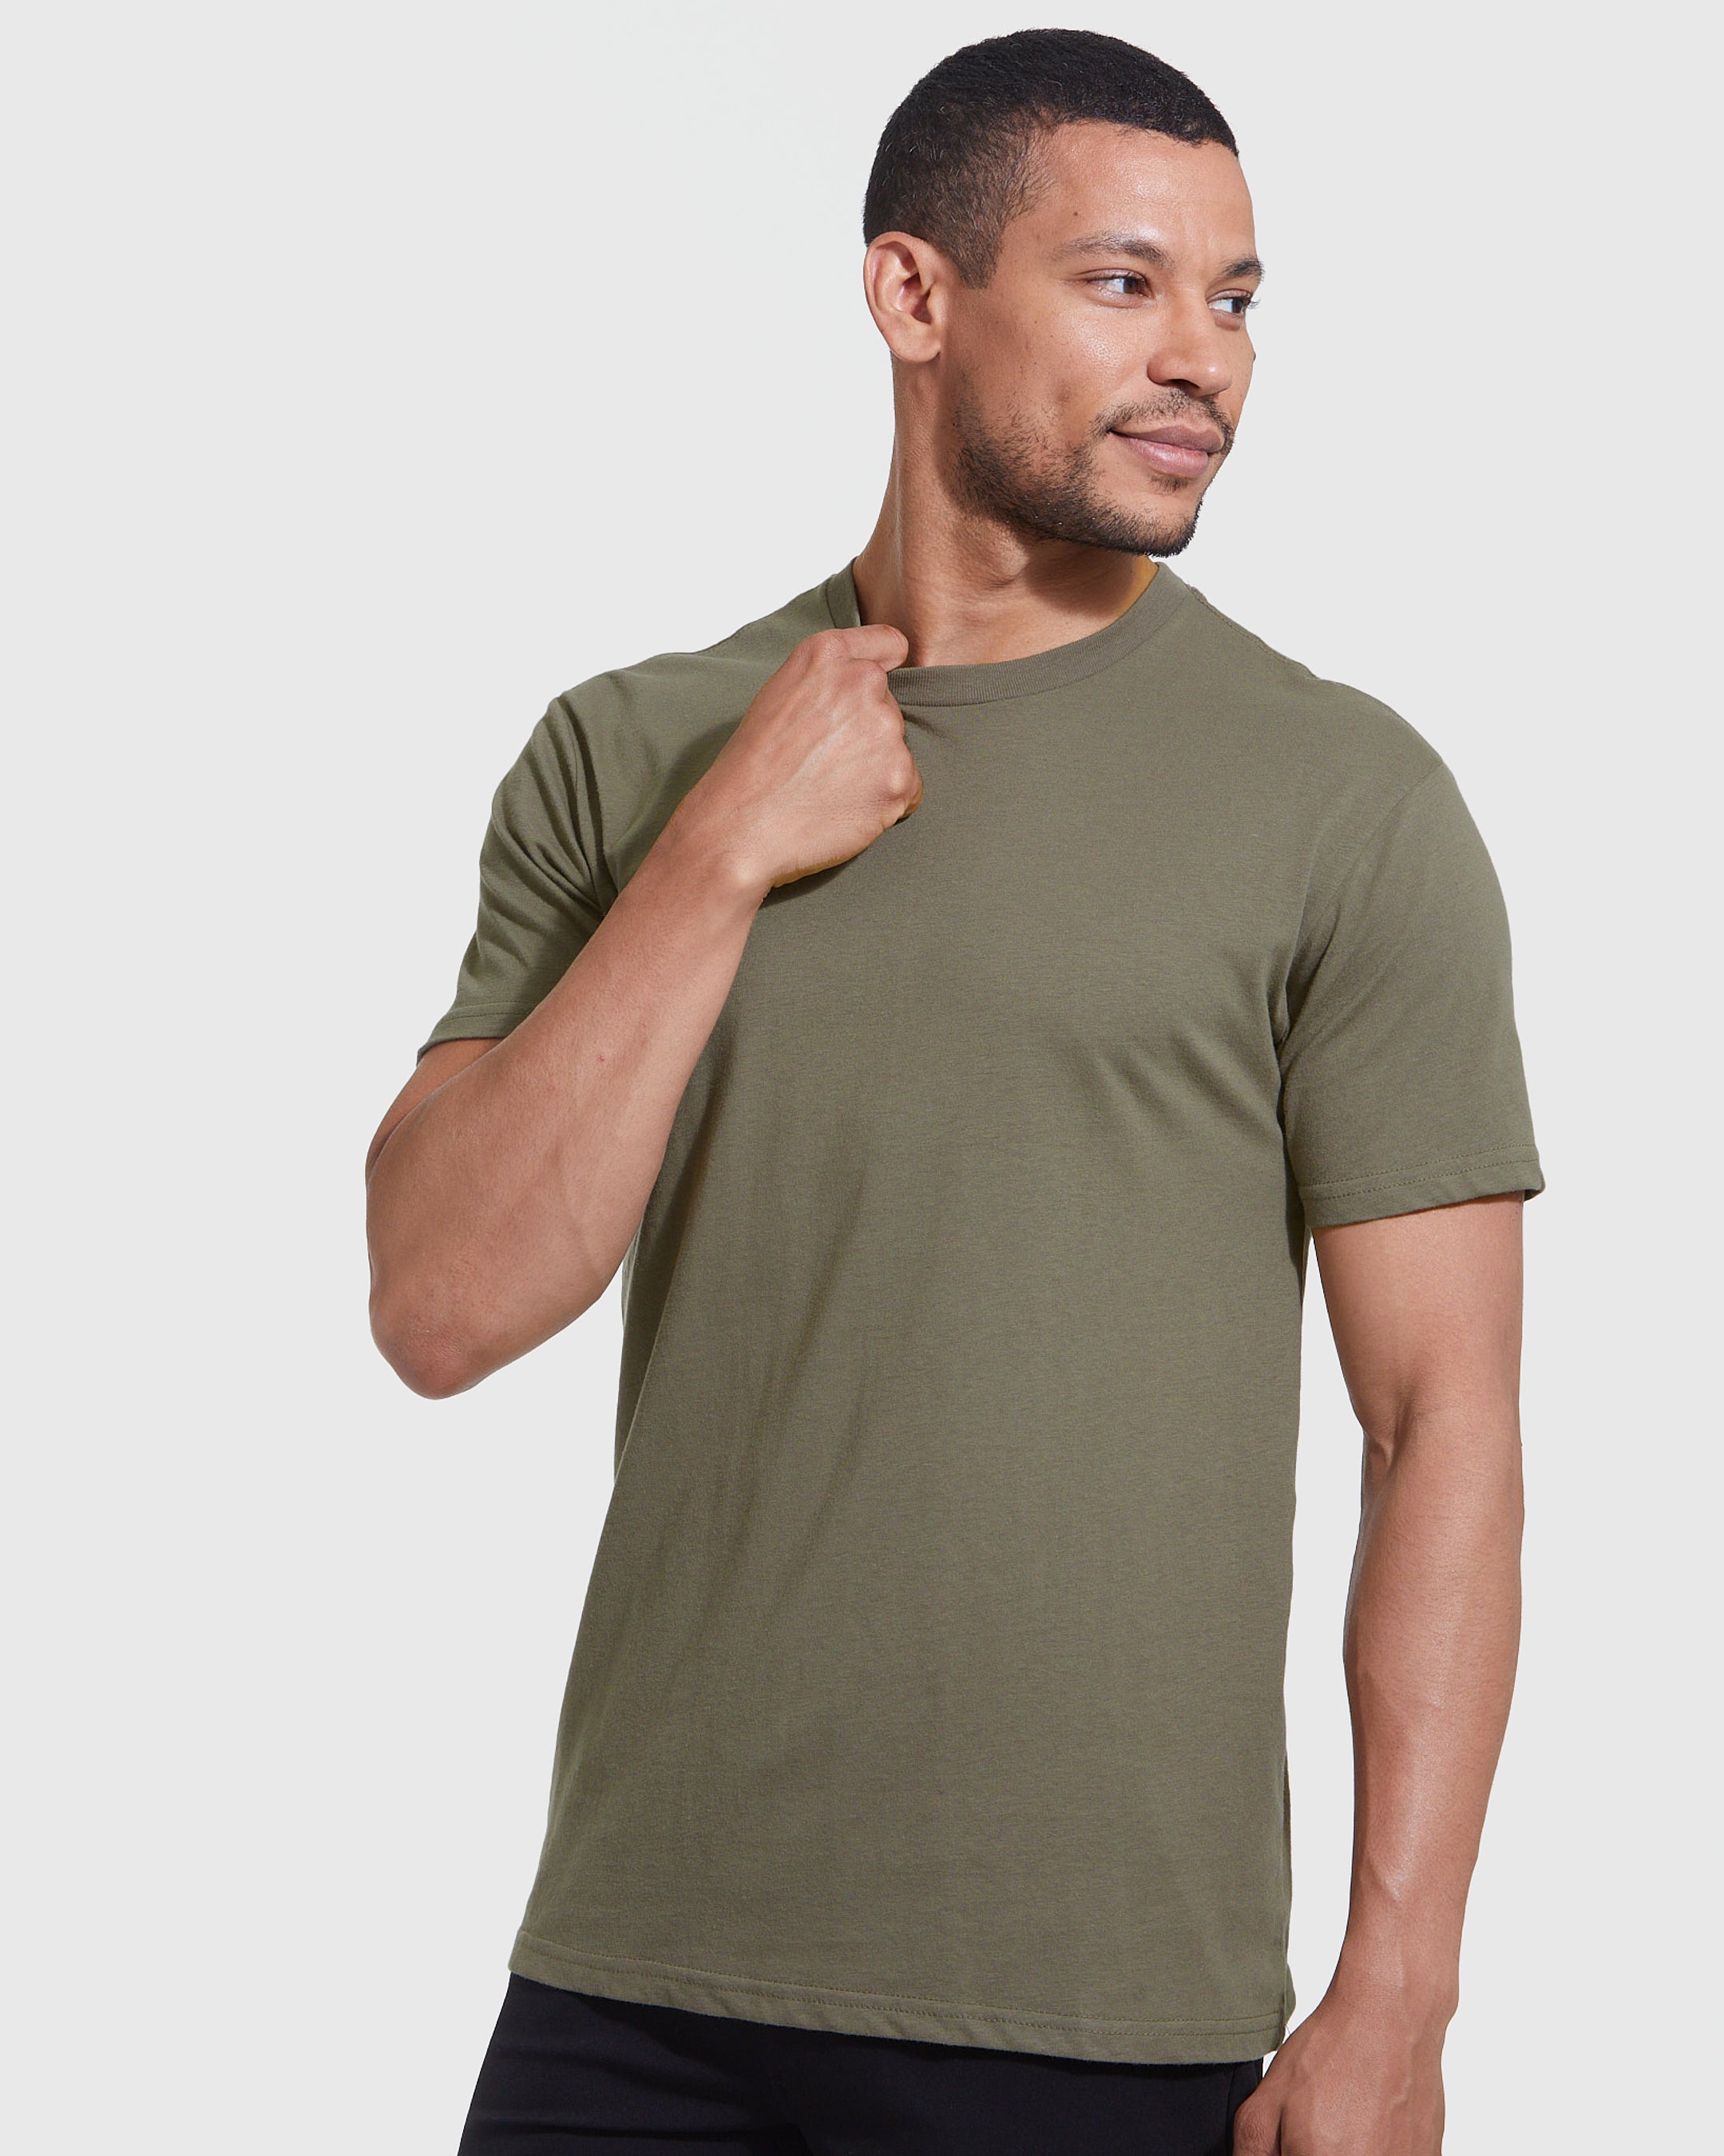 Military Green Crew Classic True Neck – T-Shirt